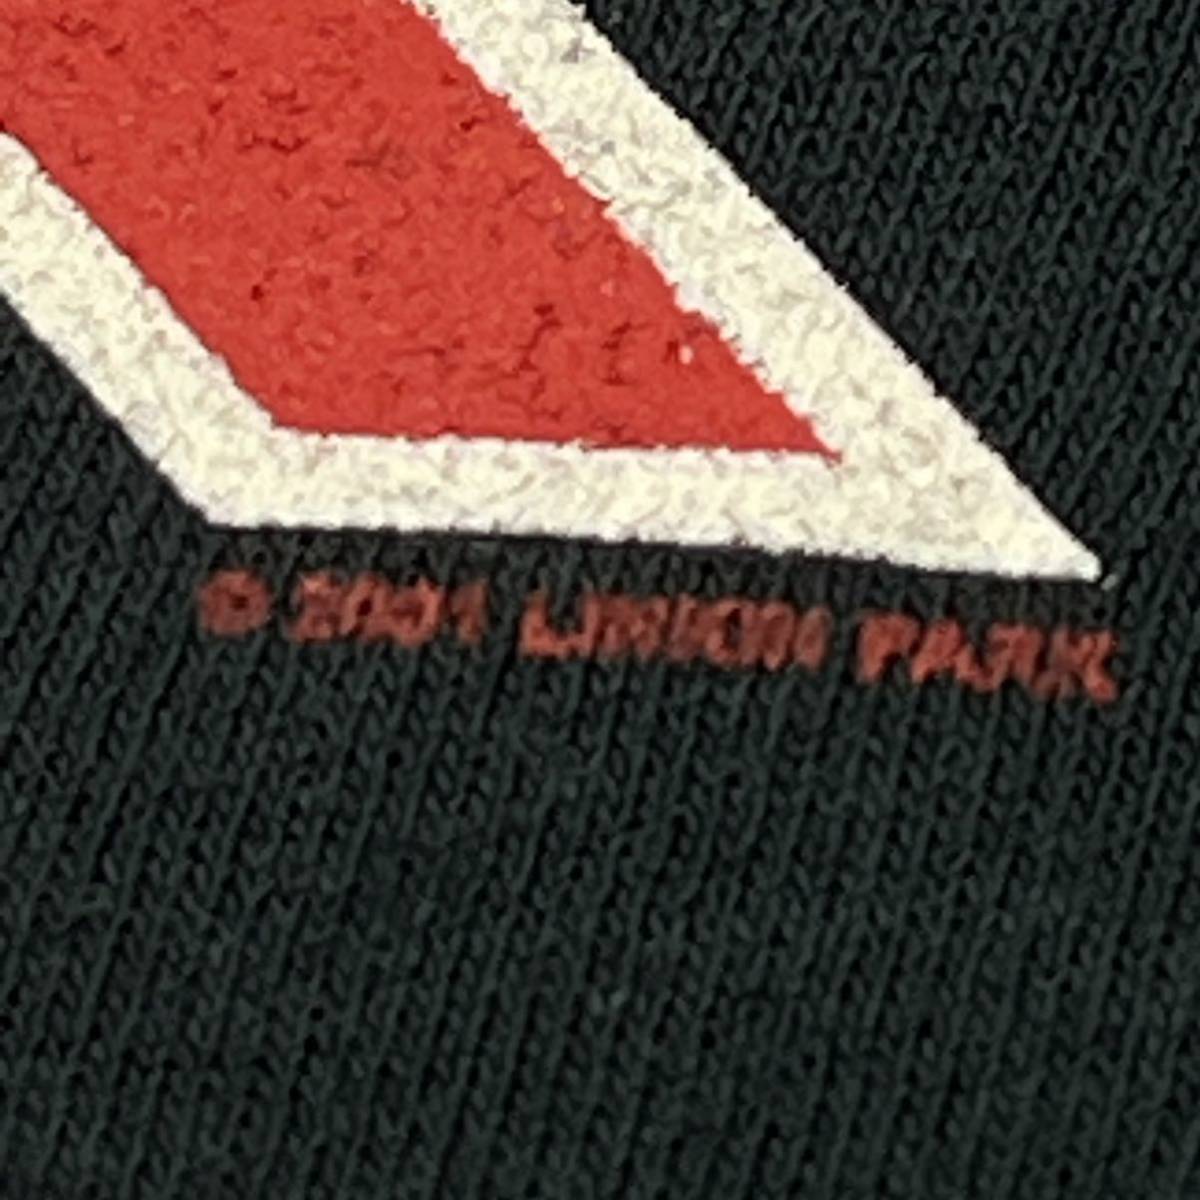  Vintage 00s[Y2K]LINKIN PARK Lynn gold park футболка L б/у одежда 90s блокировка T korn SLIPKNOT CRADLE OF FILTH MARILYN MANSON ROB ZOMBIE